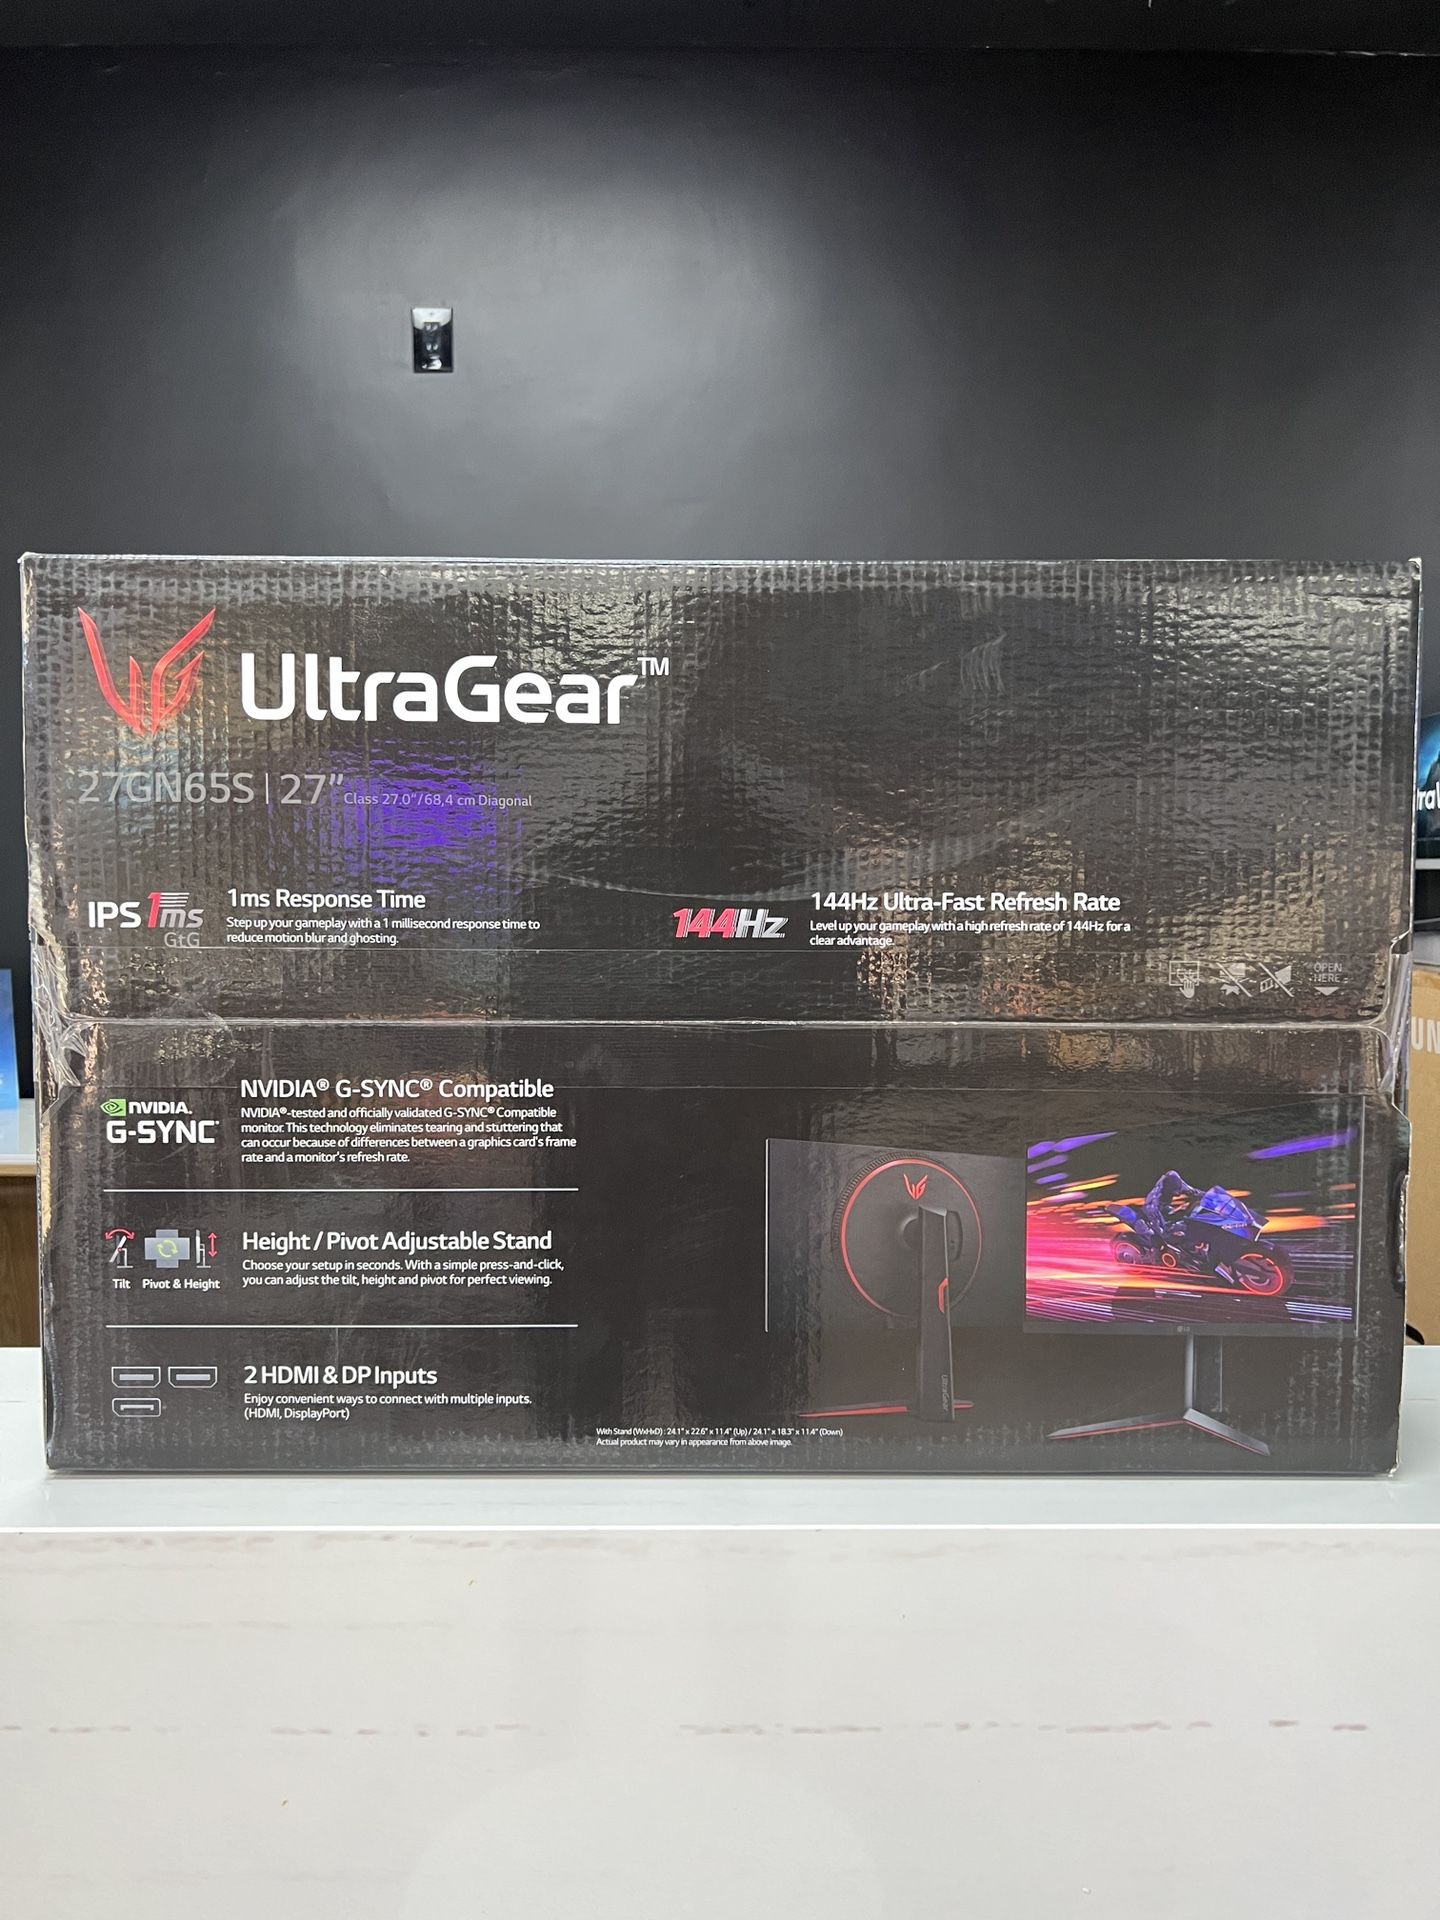 LG Ultragear 27” Gaming Monitor (27GN65S)